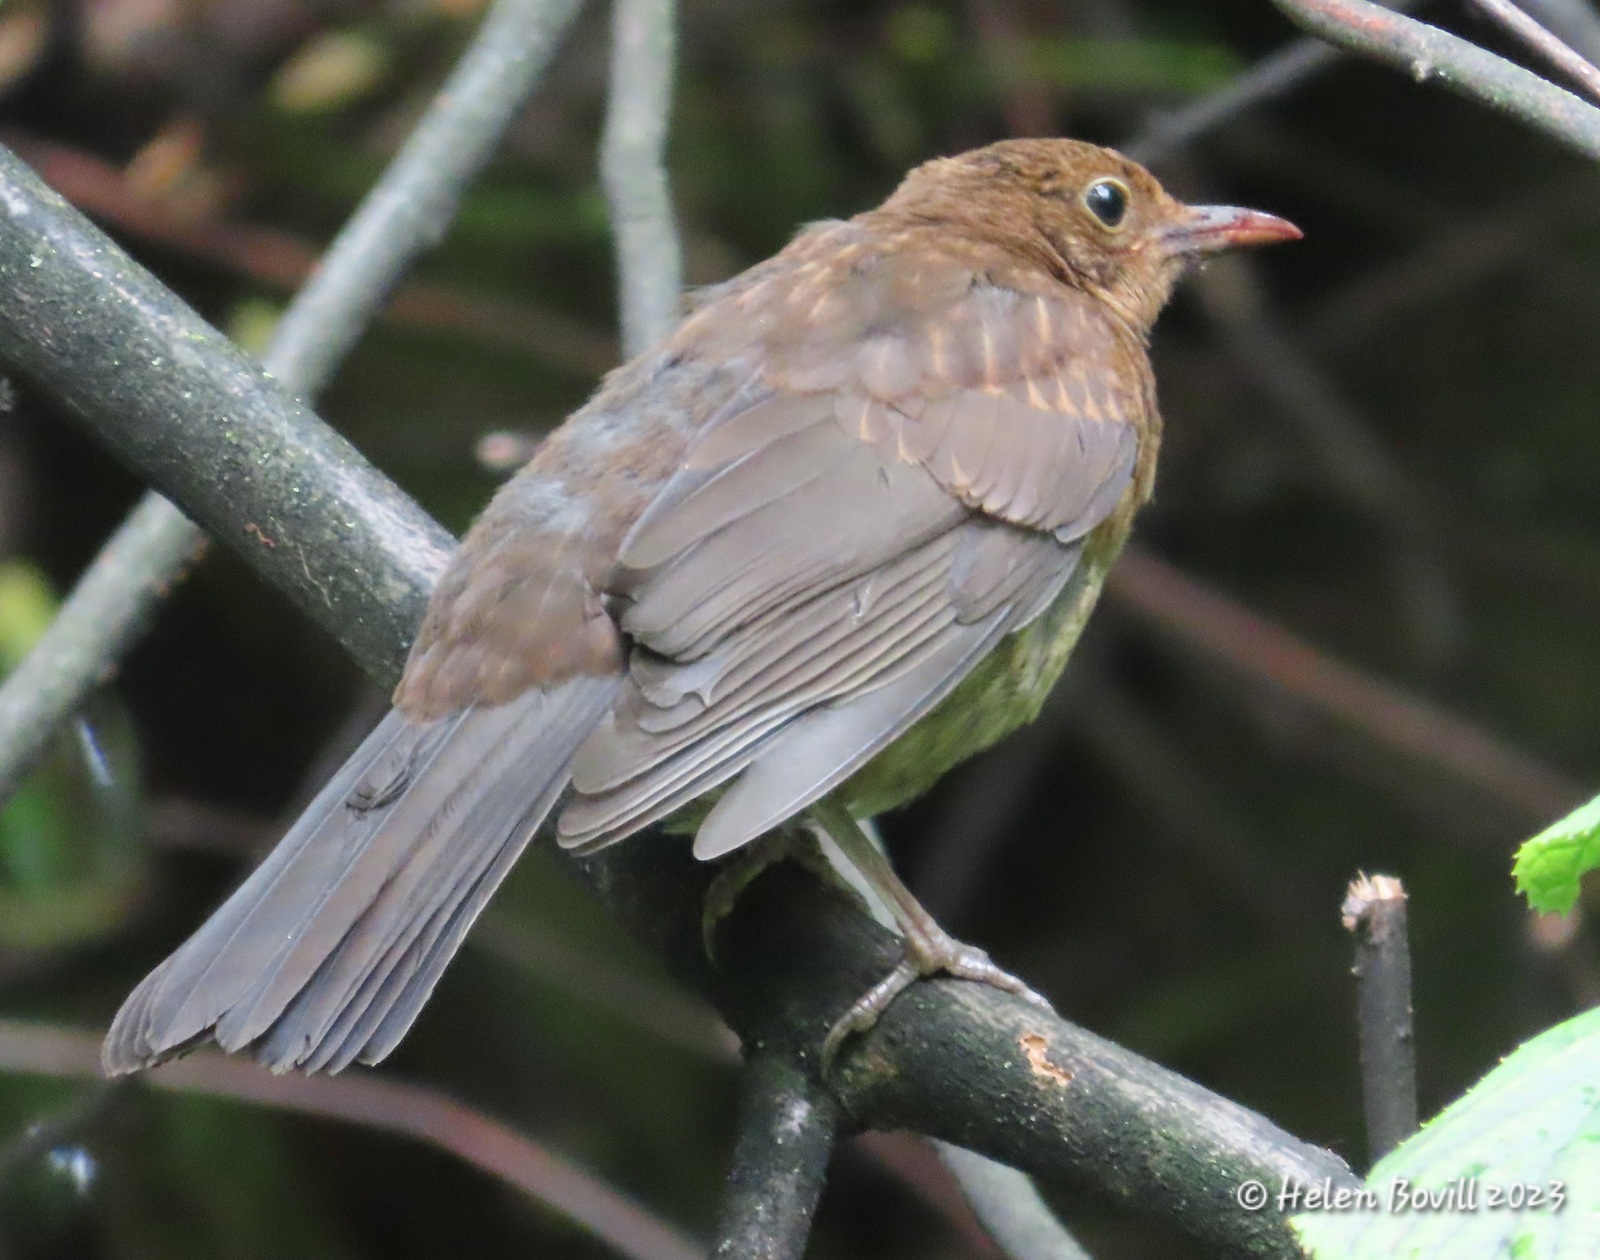 A young Blackbird on a branch